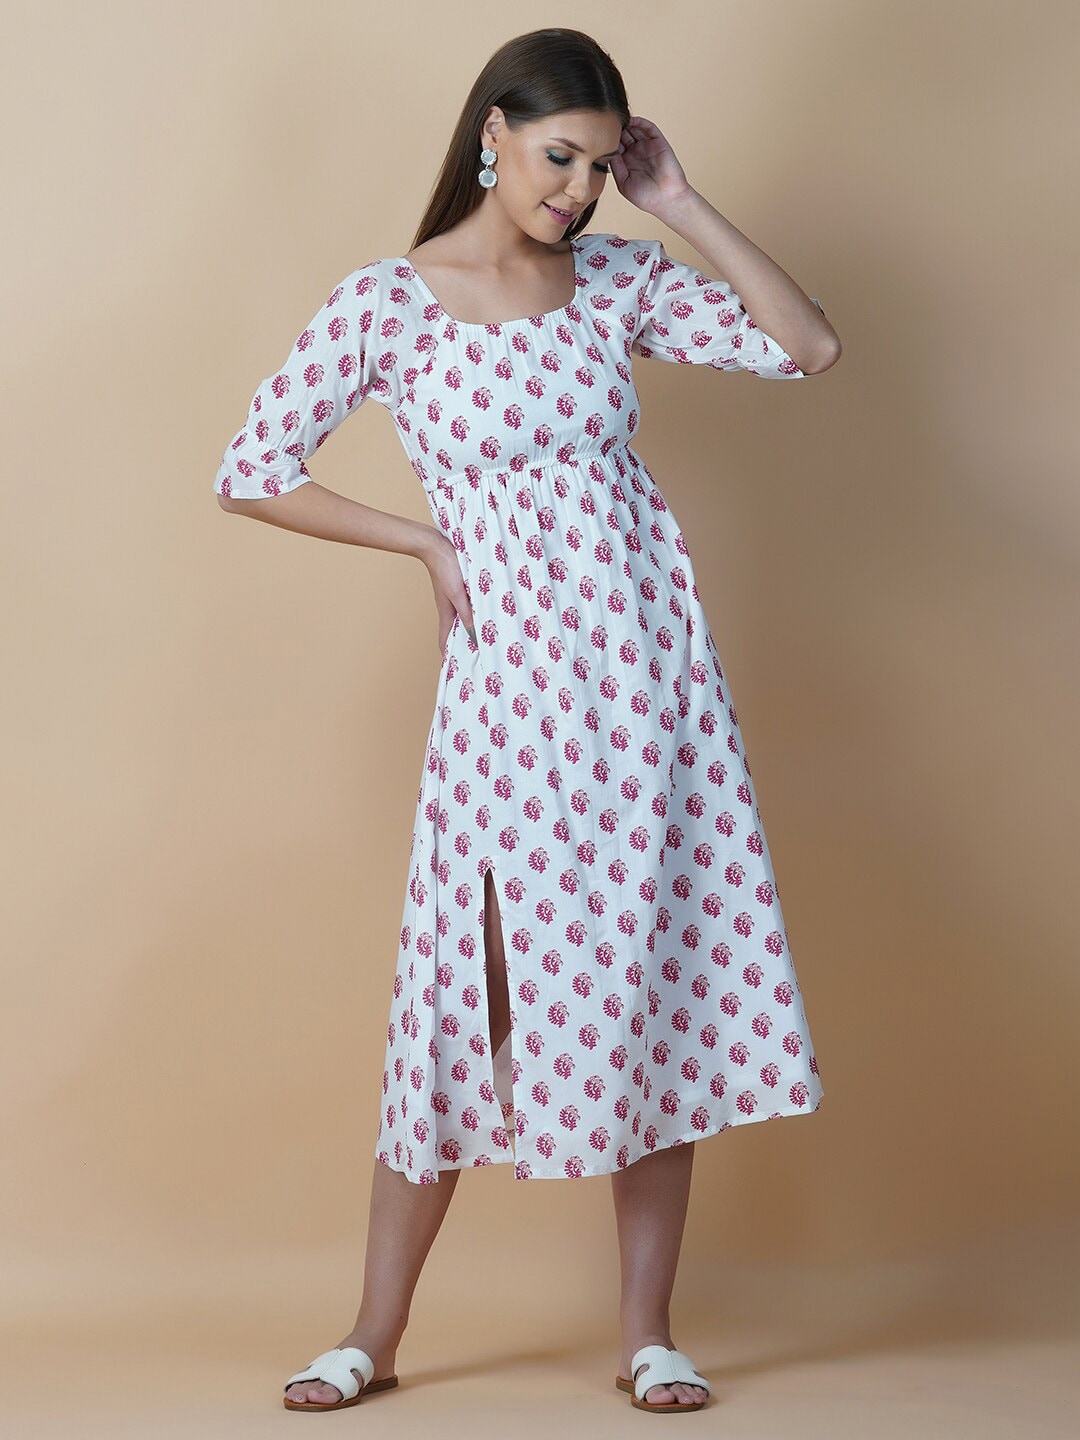 Twilldor White & Pink Cotton Ethnic Motifs A-Line Midi Dress Price in India